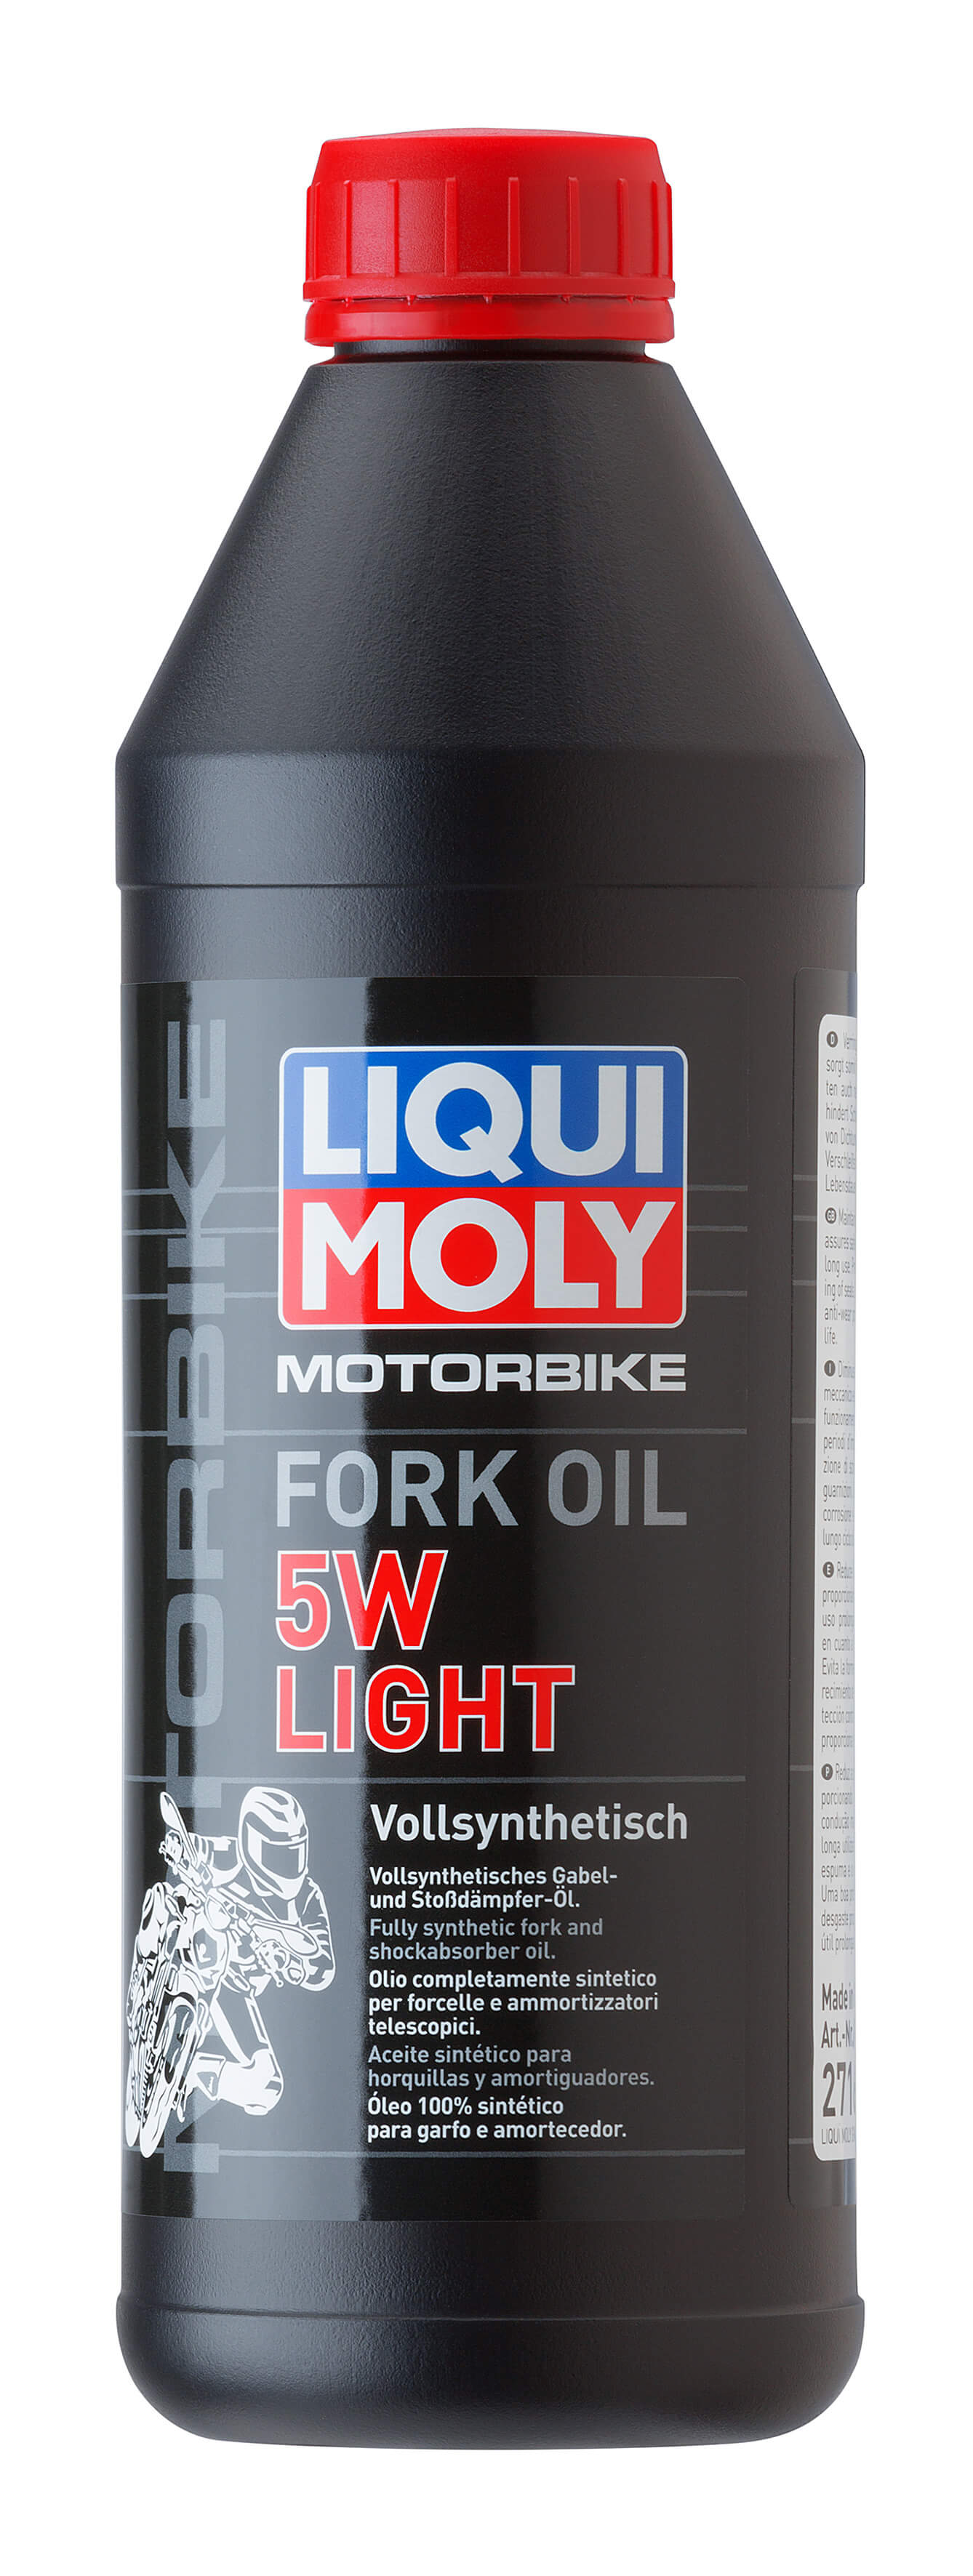 Масло для вилок и амортизаторов 5W (синтетическое) Motorbike Fork Oil 5W Light  1L